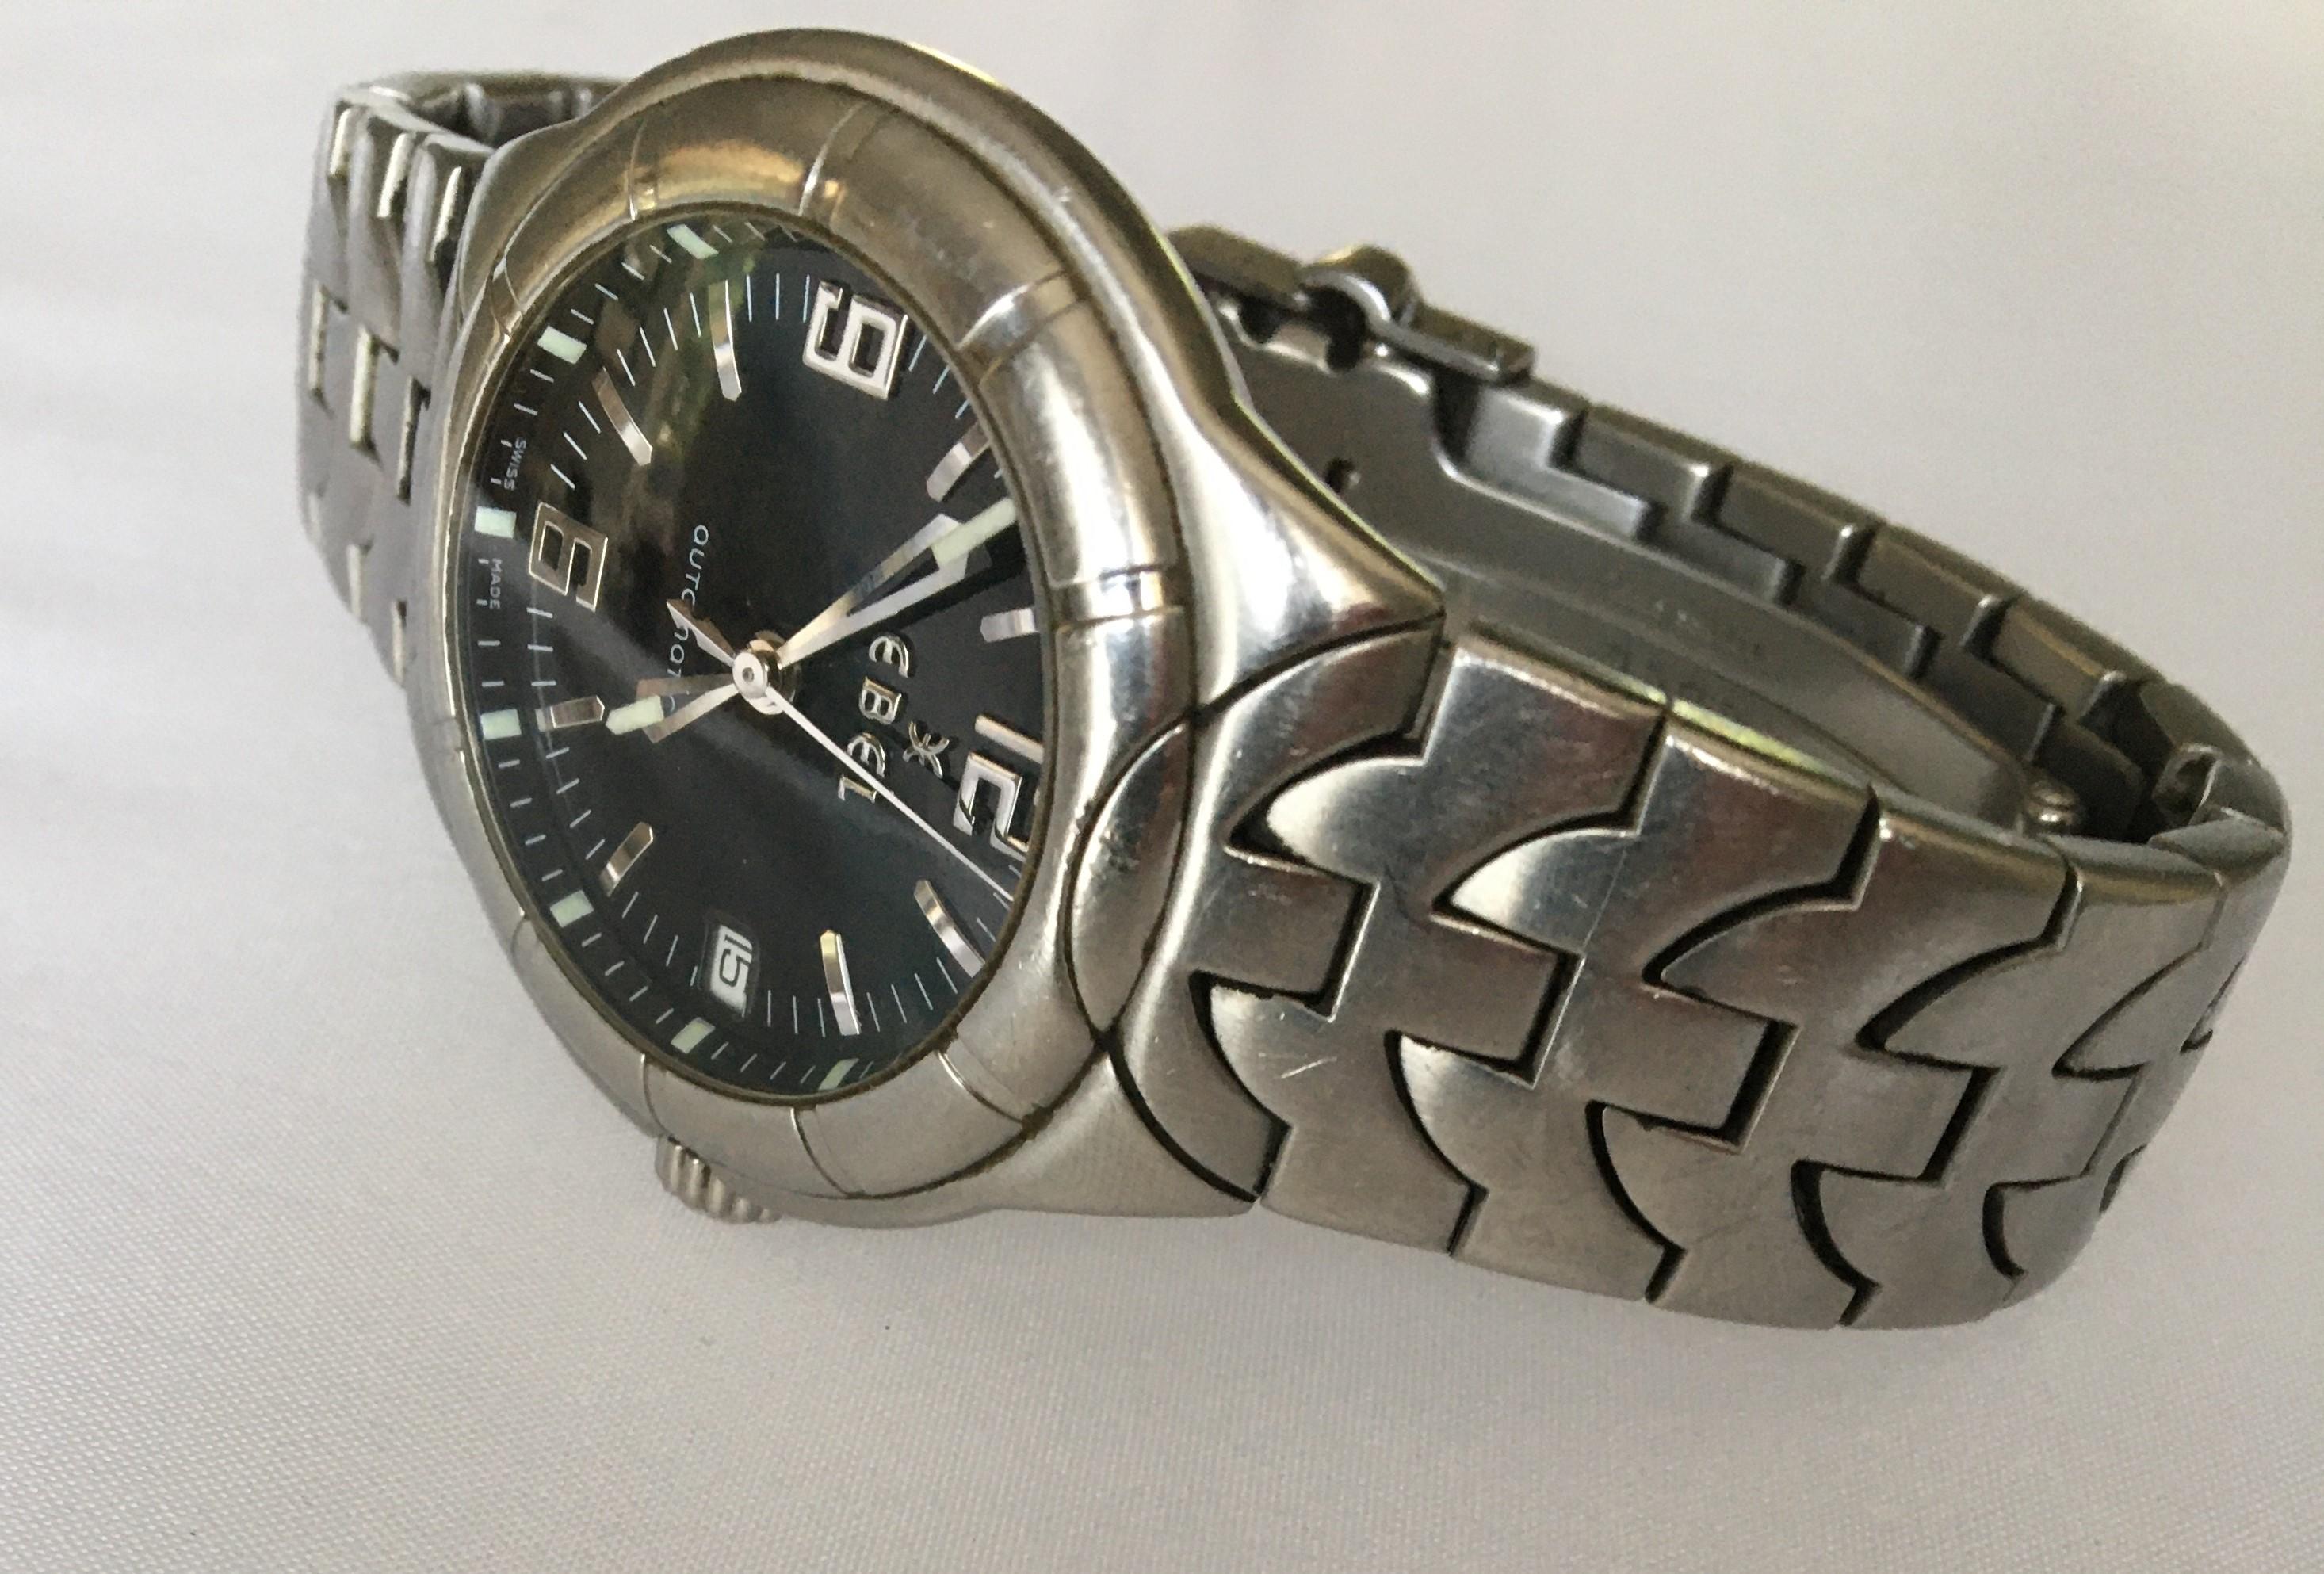 By luxury watch designer Ebel.
Brushed stainless steel bracelet, bracelet links resemble the Ebel 